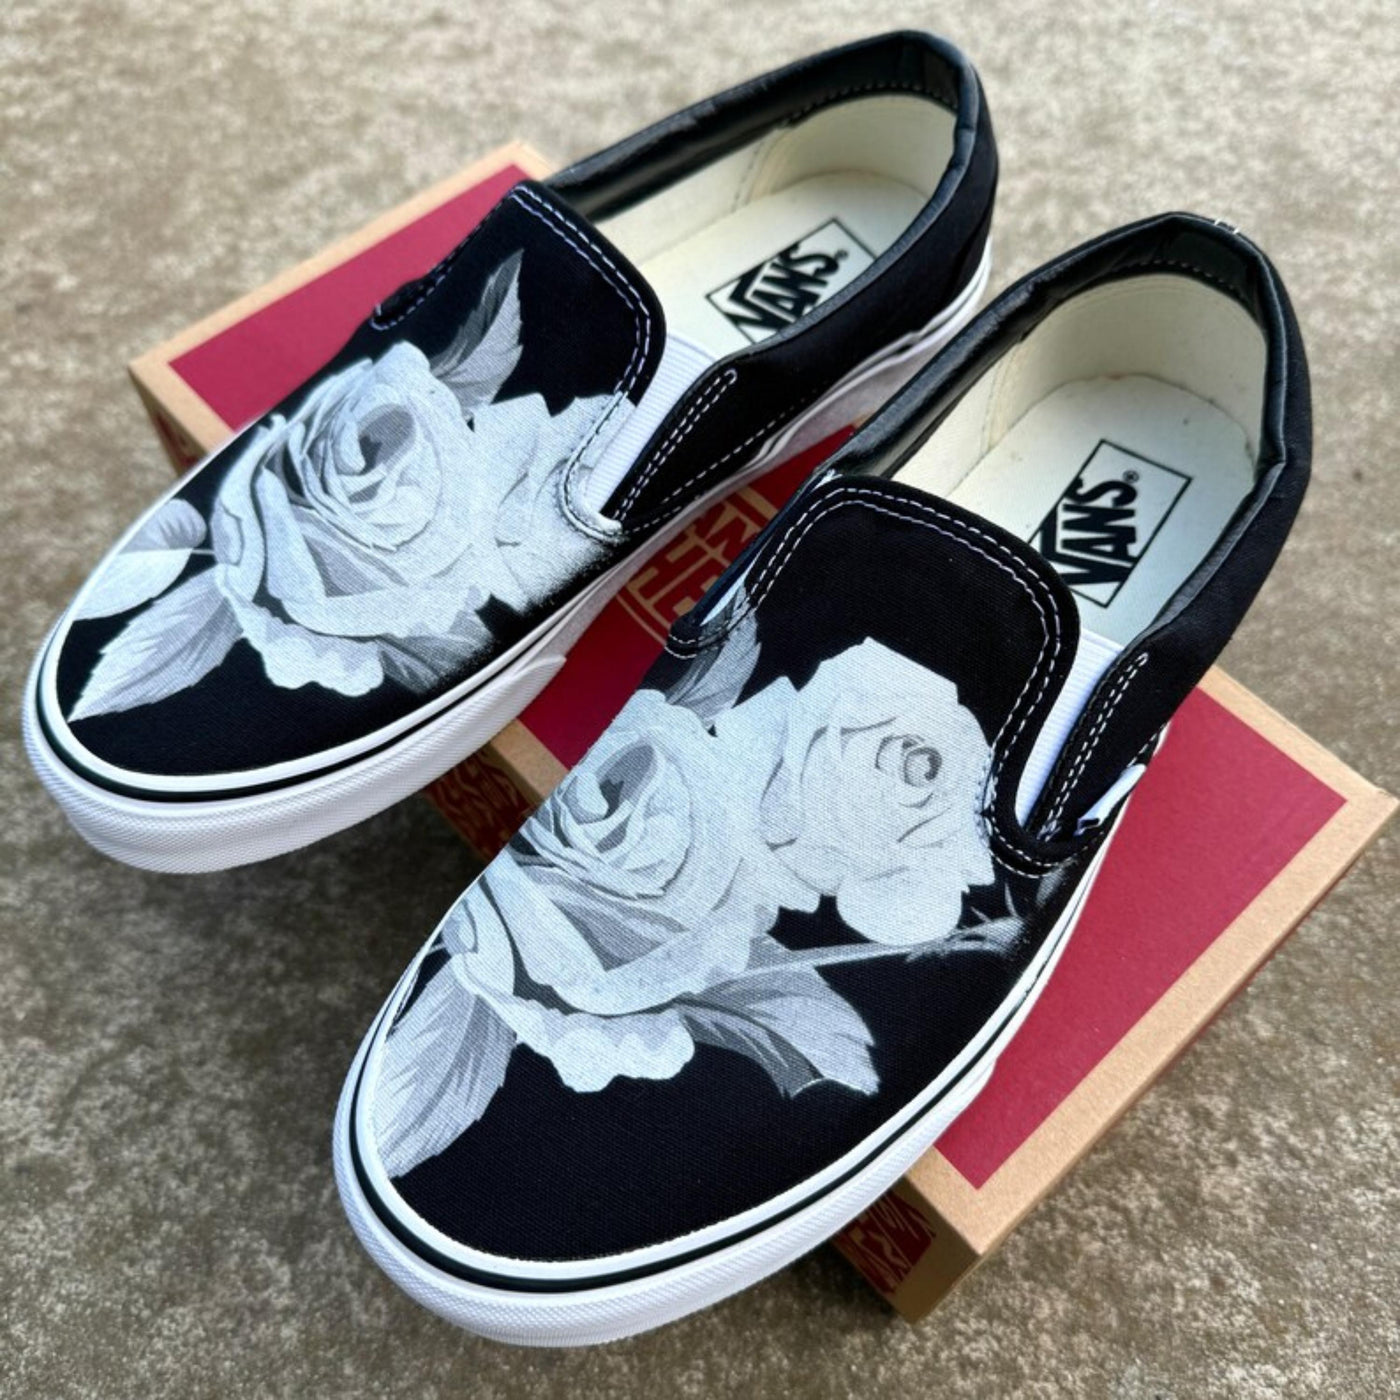 Greyscale Roses on Black Slip On Vans Shoes Vans Shoes